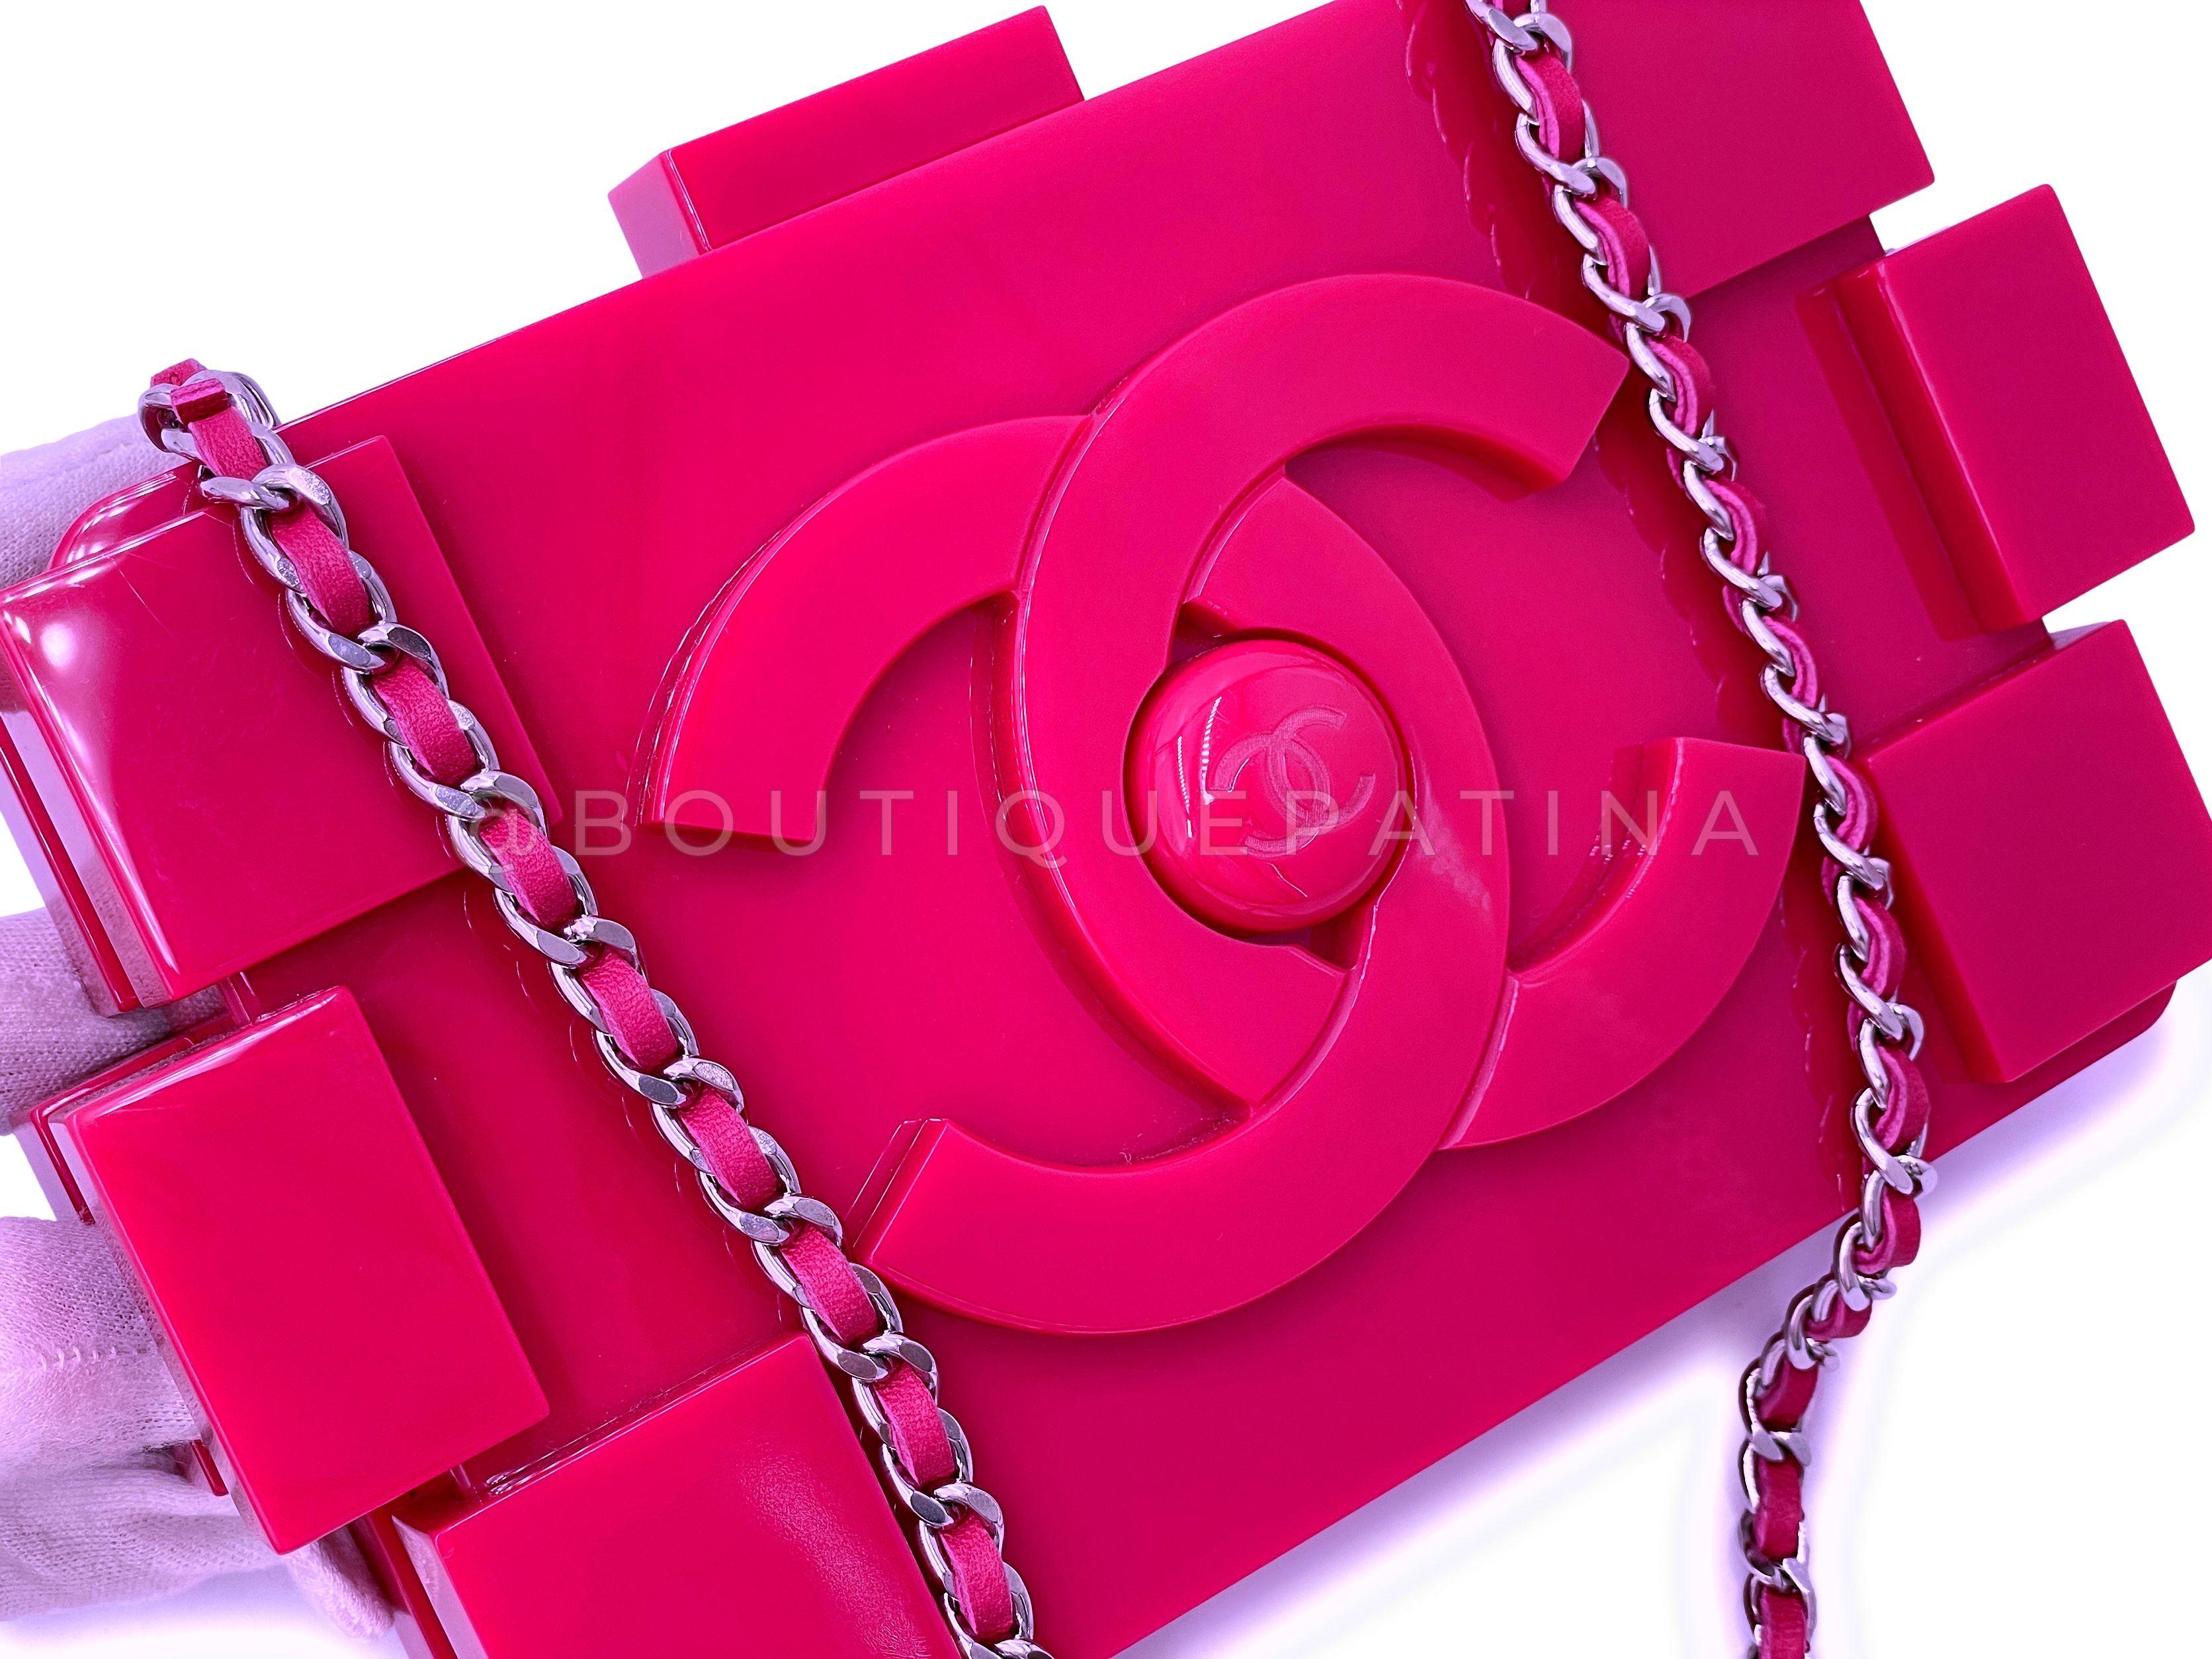 Chanel 2014 Pink Lego Brick Minaudière Plexiglass Clutch Shoulder Bag RHW 67522 For Sale 4